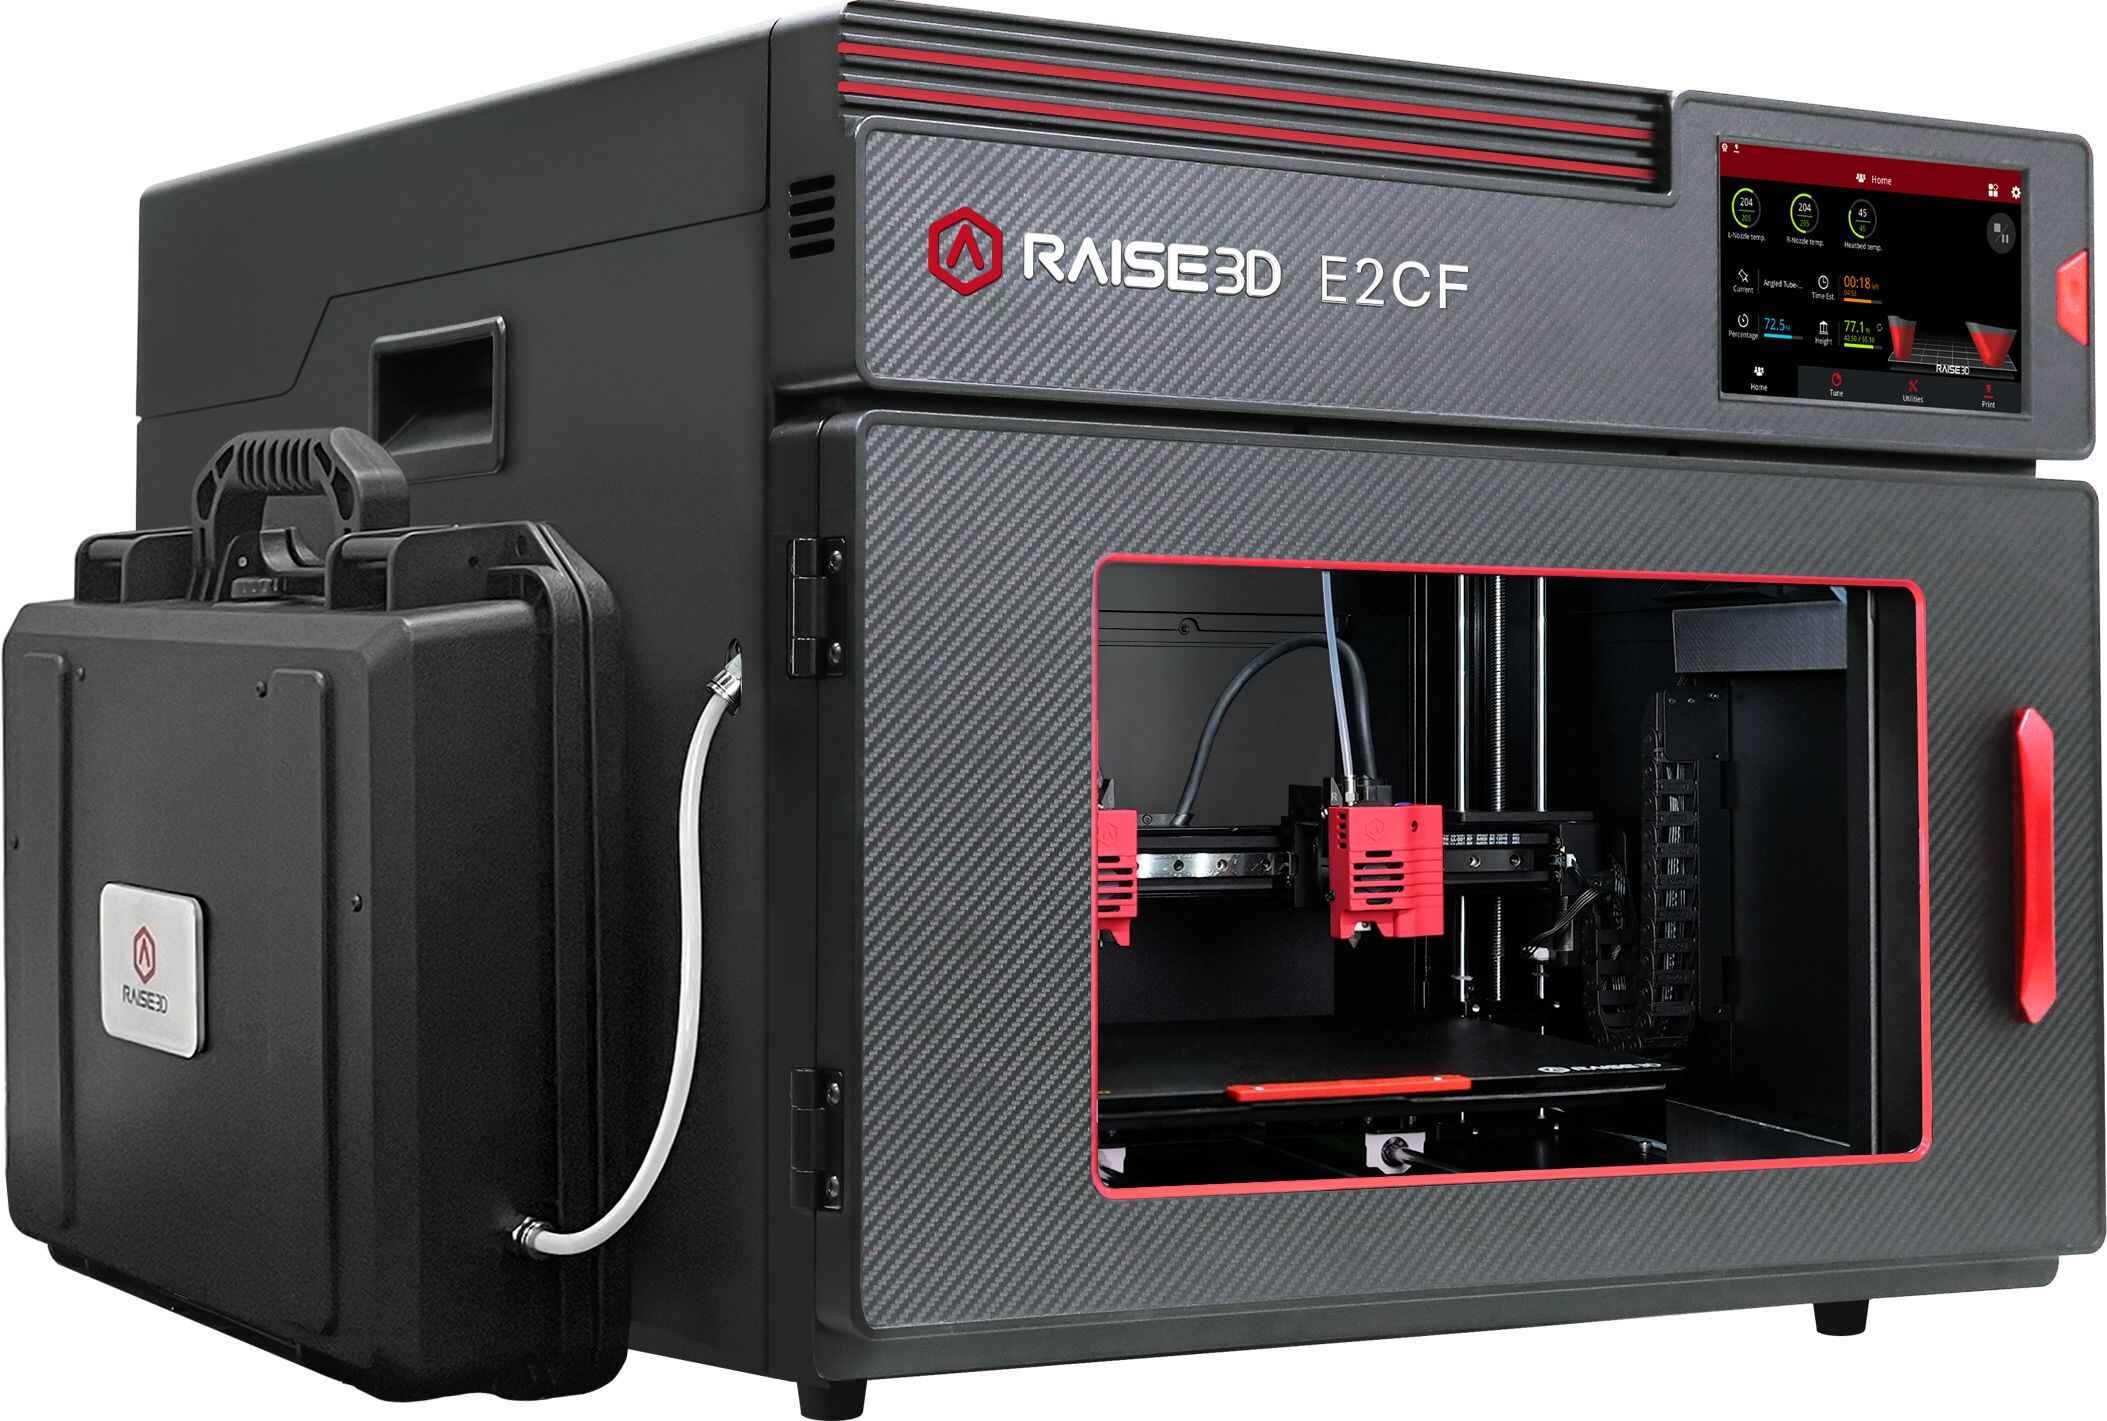 What 3D Printer Can Print Carbon Fiber